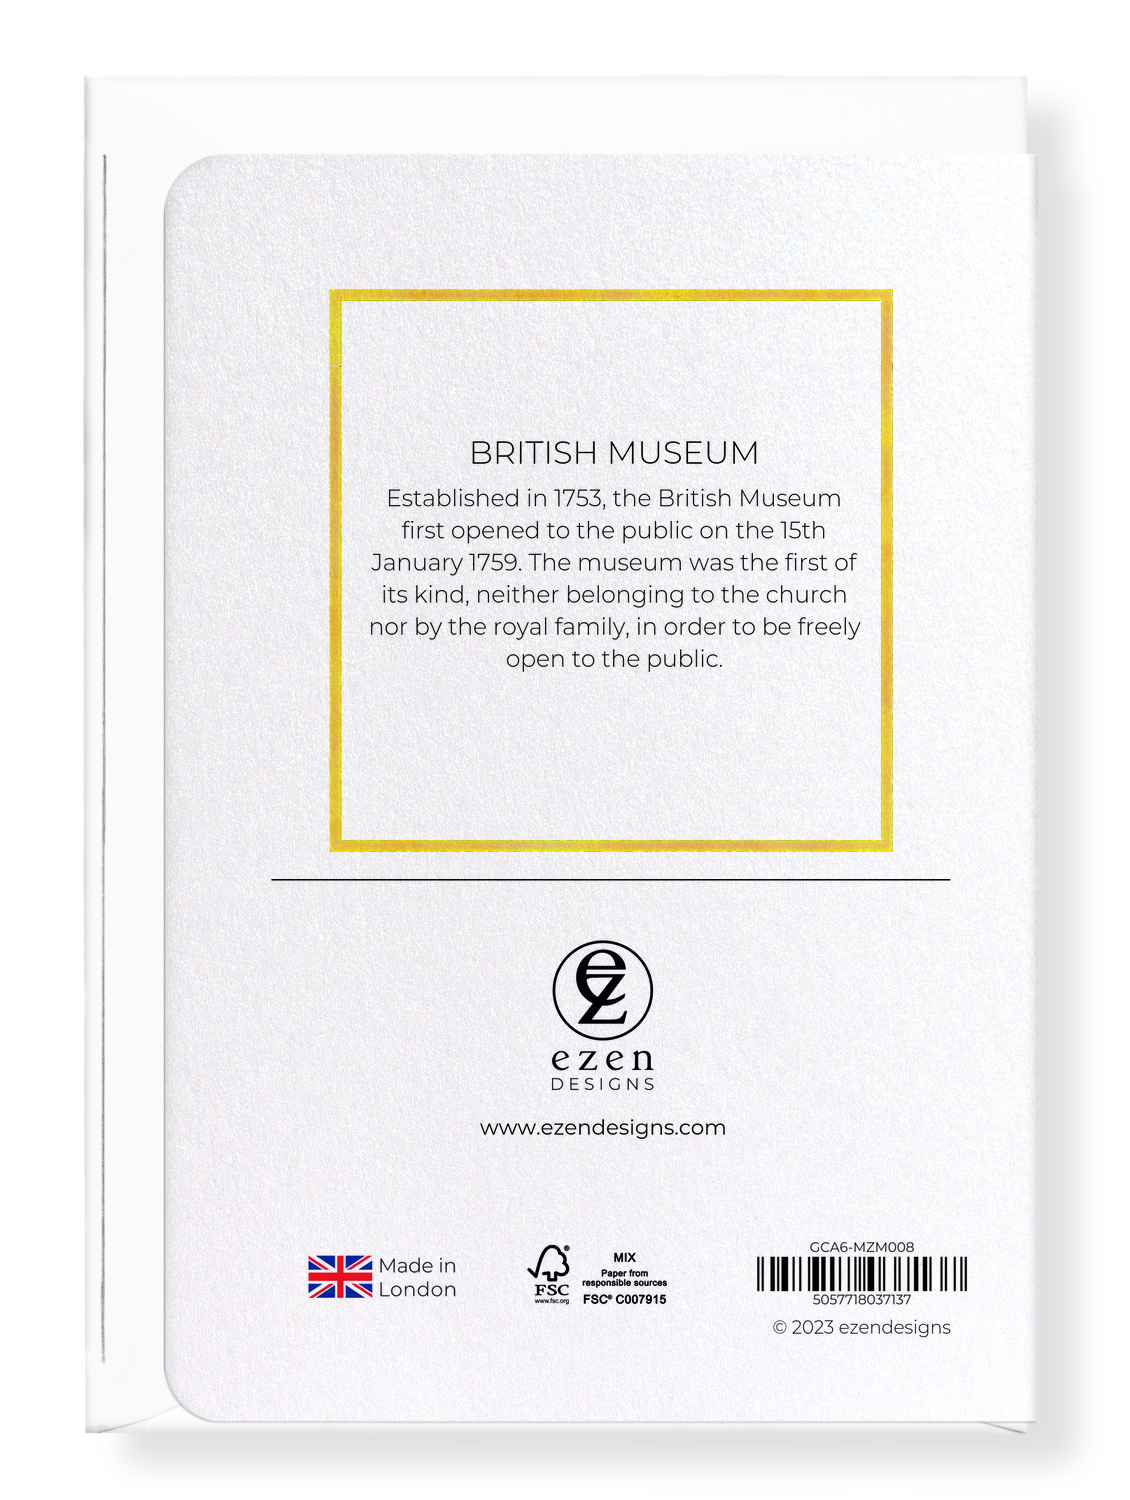 Ezen Designs - British Museum - Greeting Card - Back